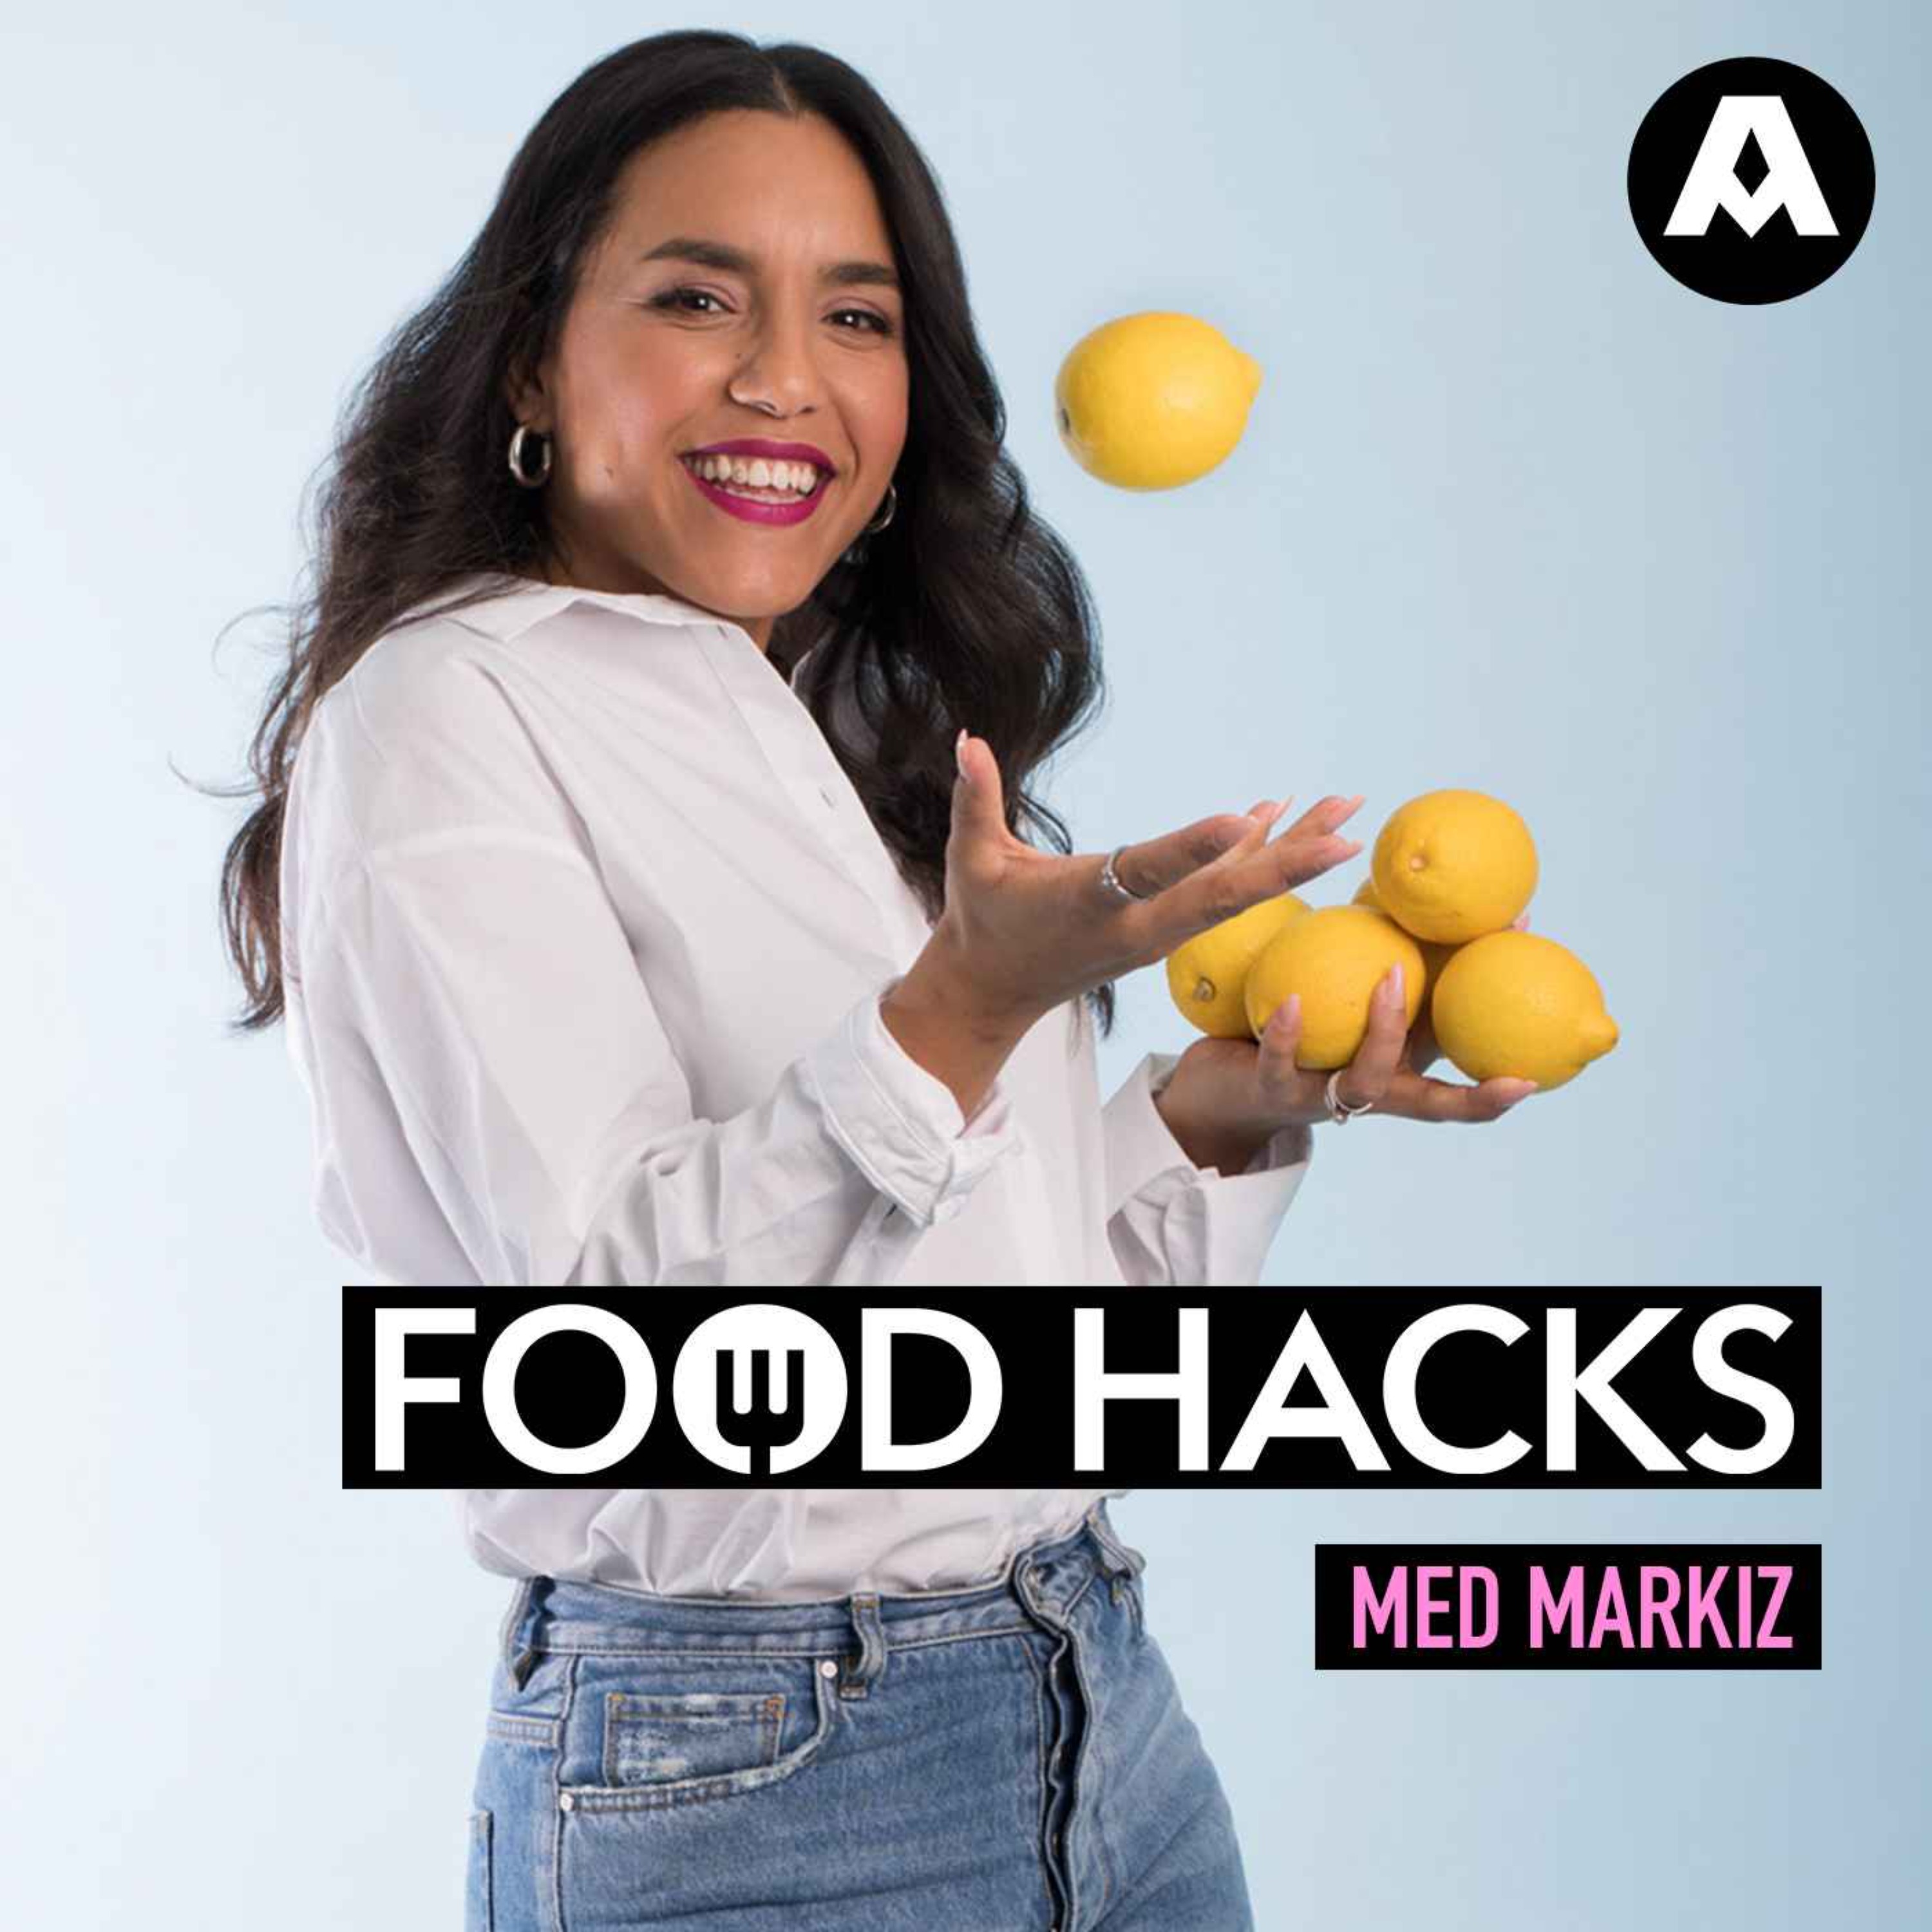 Food hacks: Laga mat billigt!